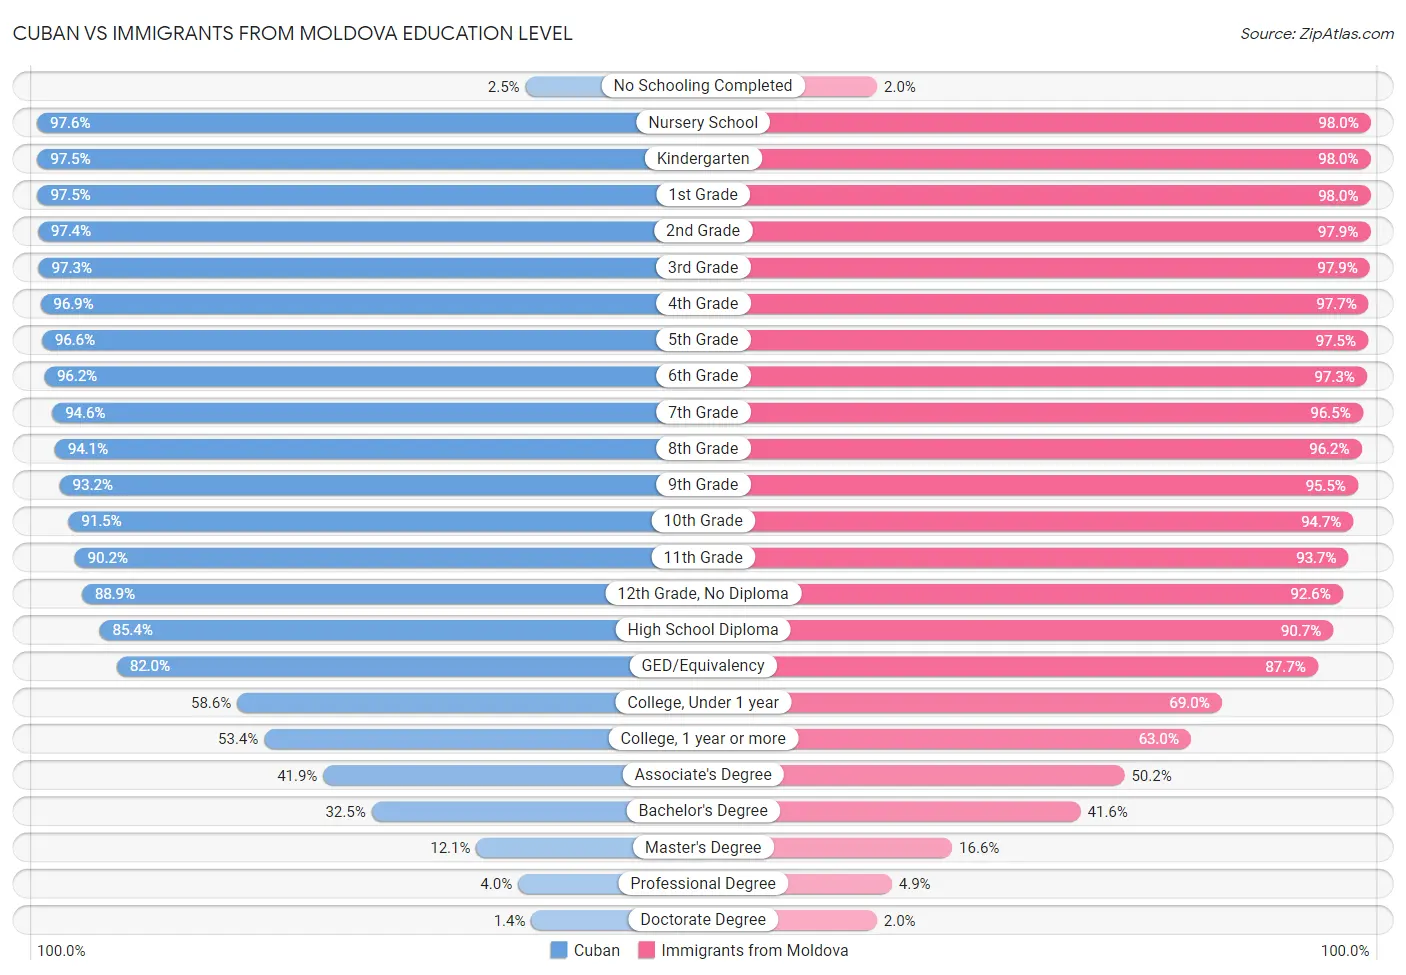 Cuban vs Immigrants from Moldova Education Level